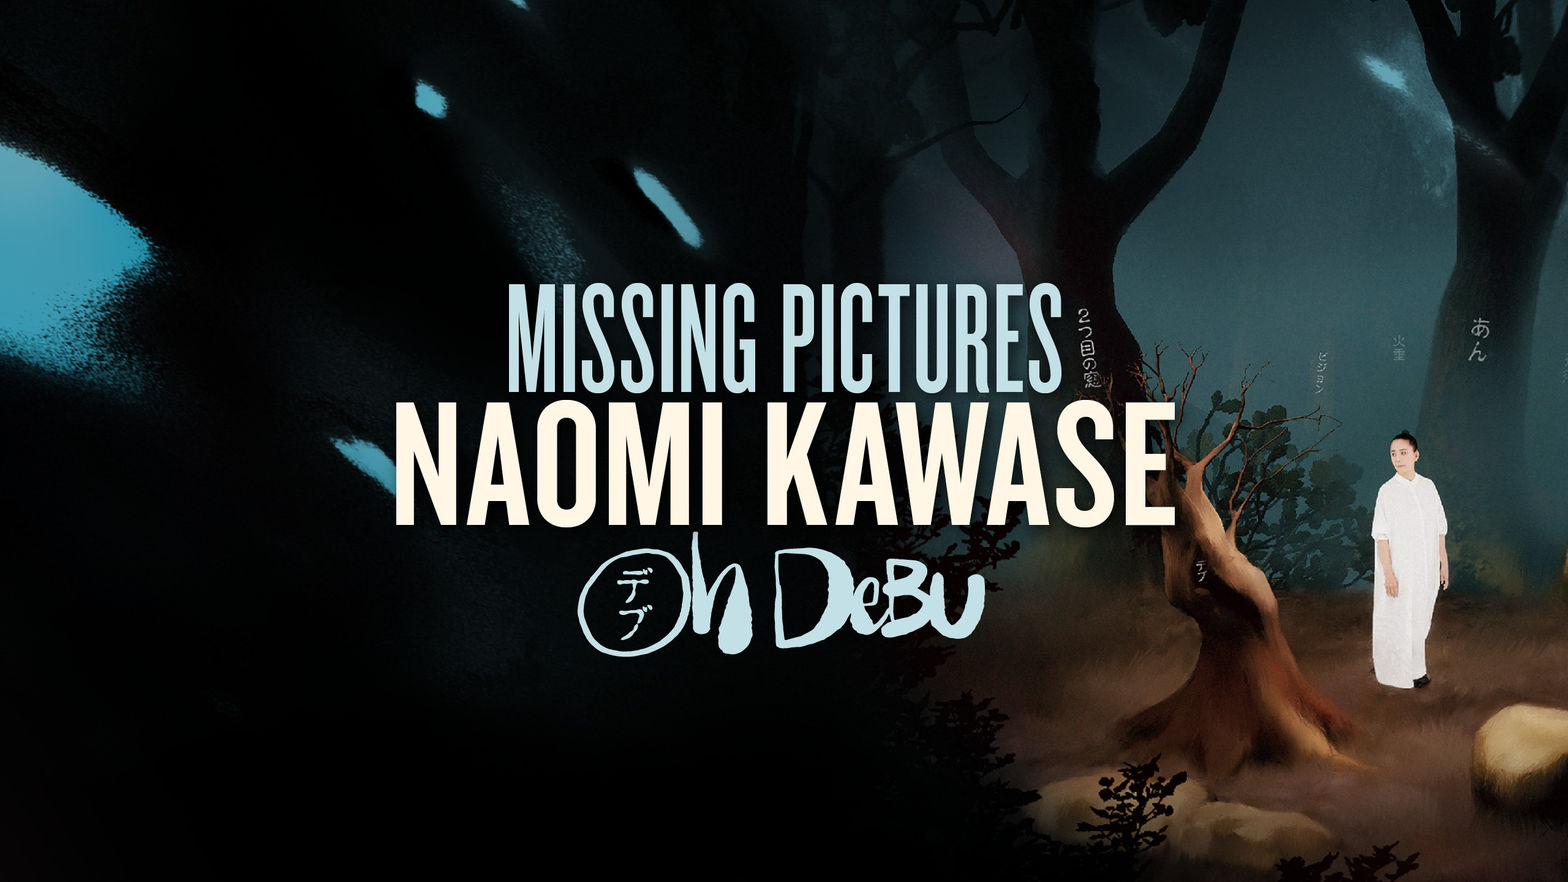 Missing Pictures: Naomi Kawase